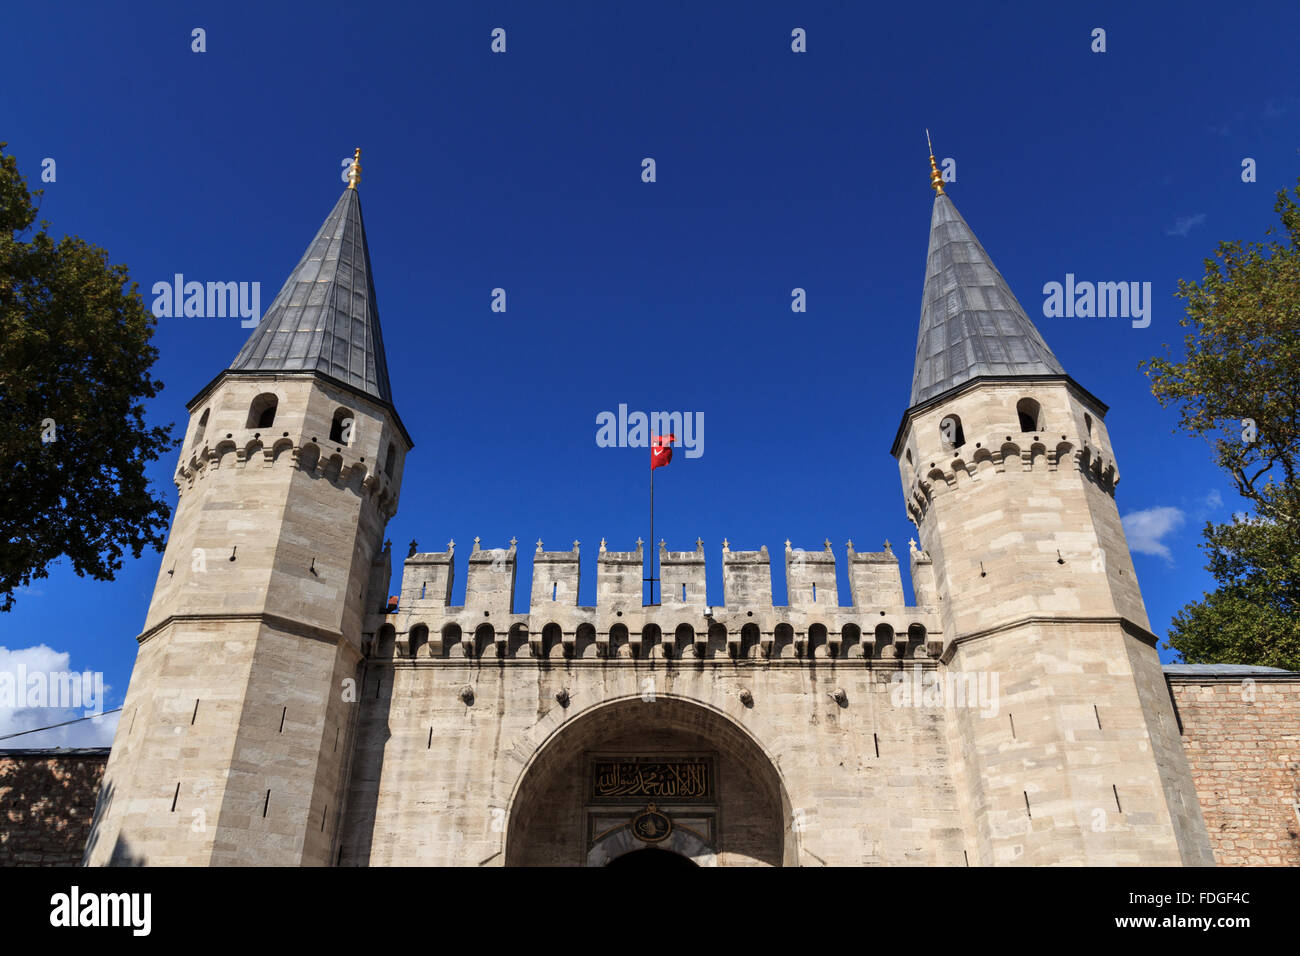 Entrance of the Topkapi palace, Istanbul, Turkey Stock Photo